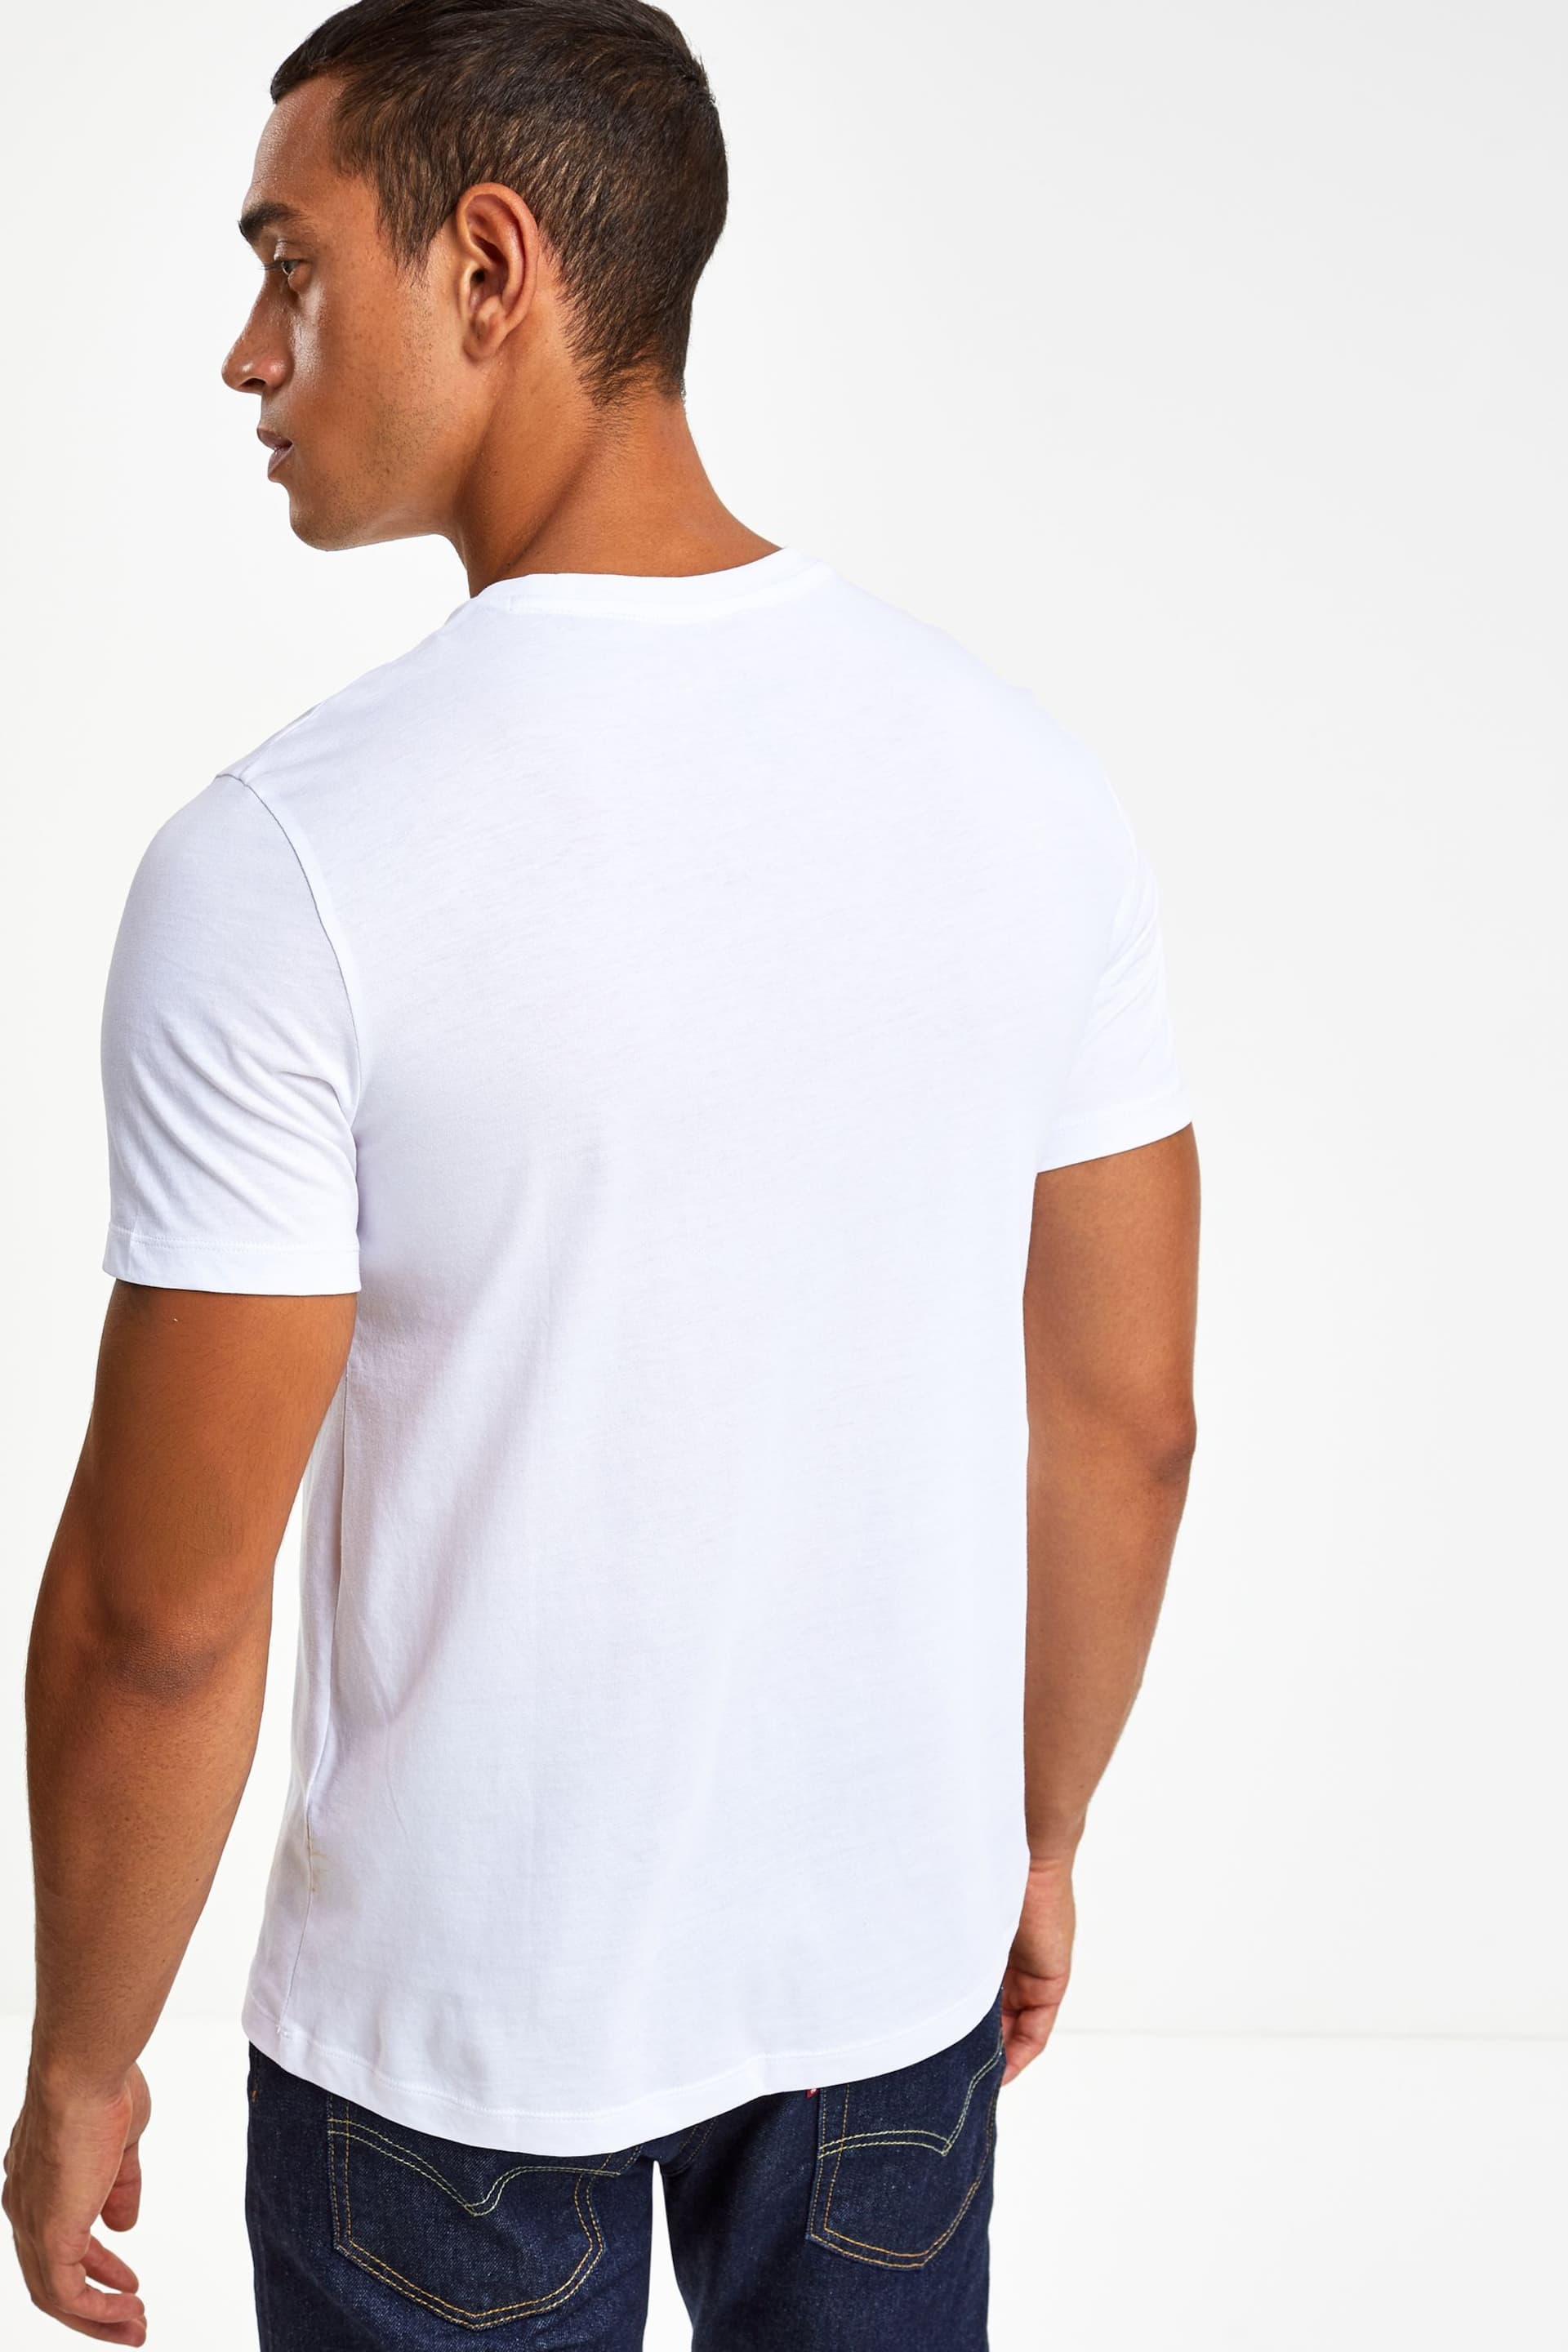 Armani Exchange Logo T-Shirt - Image 2 of 5